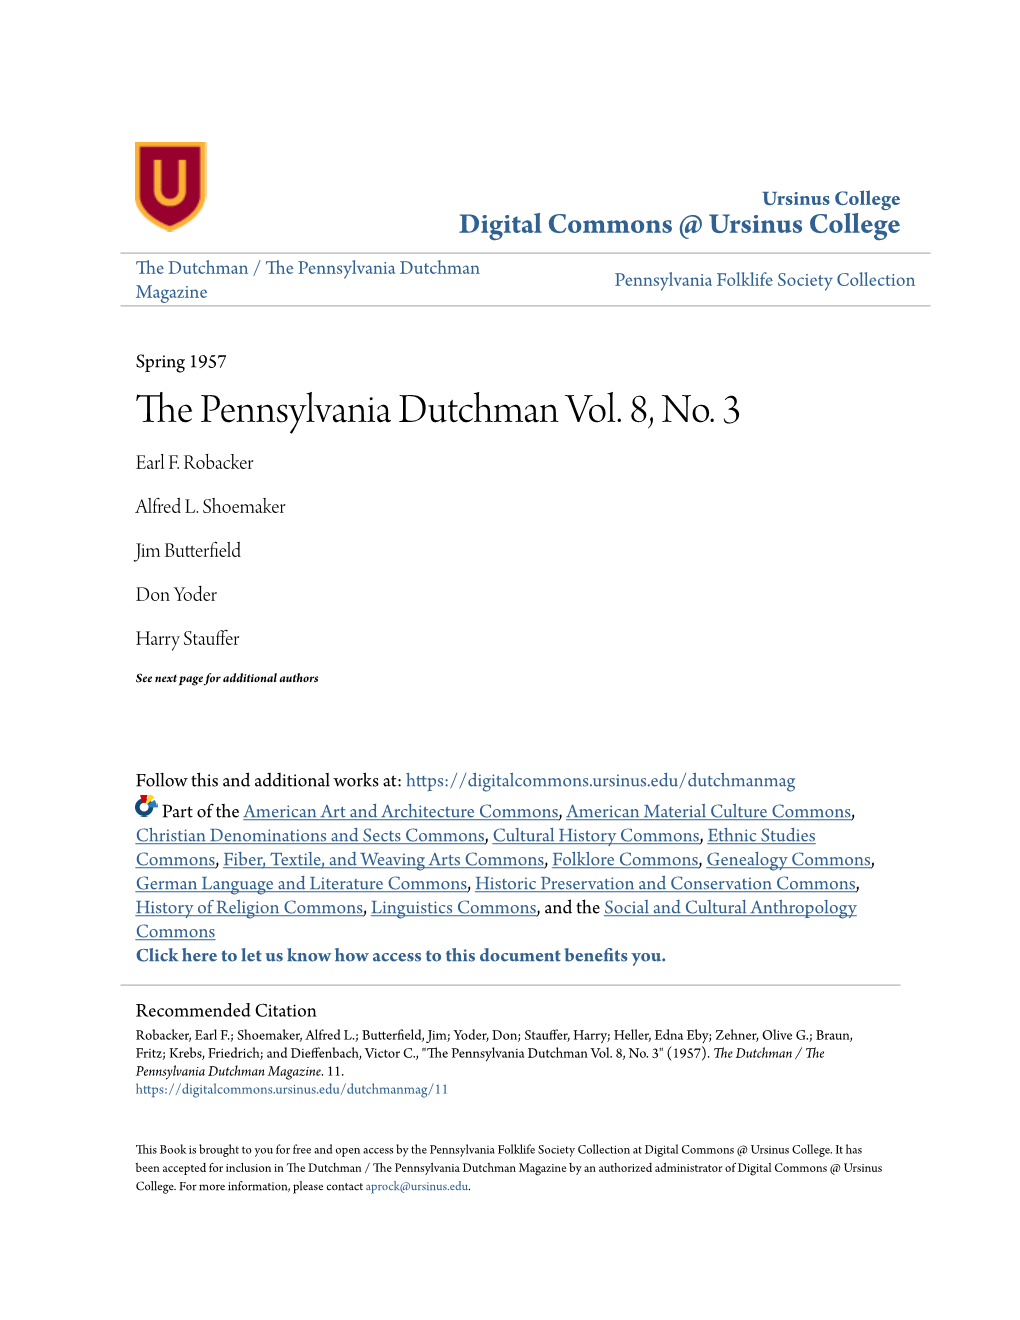 The Pennsylvania Dutchman Vol. 8, No. 3